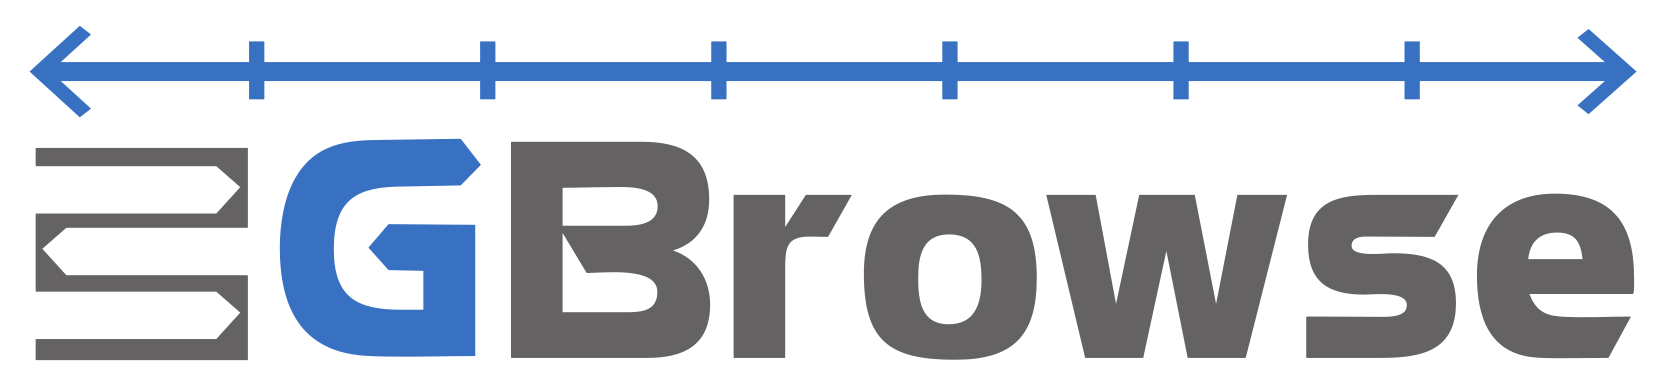 http://gmod.org/wiki/GBrowse#Logo}}